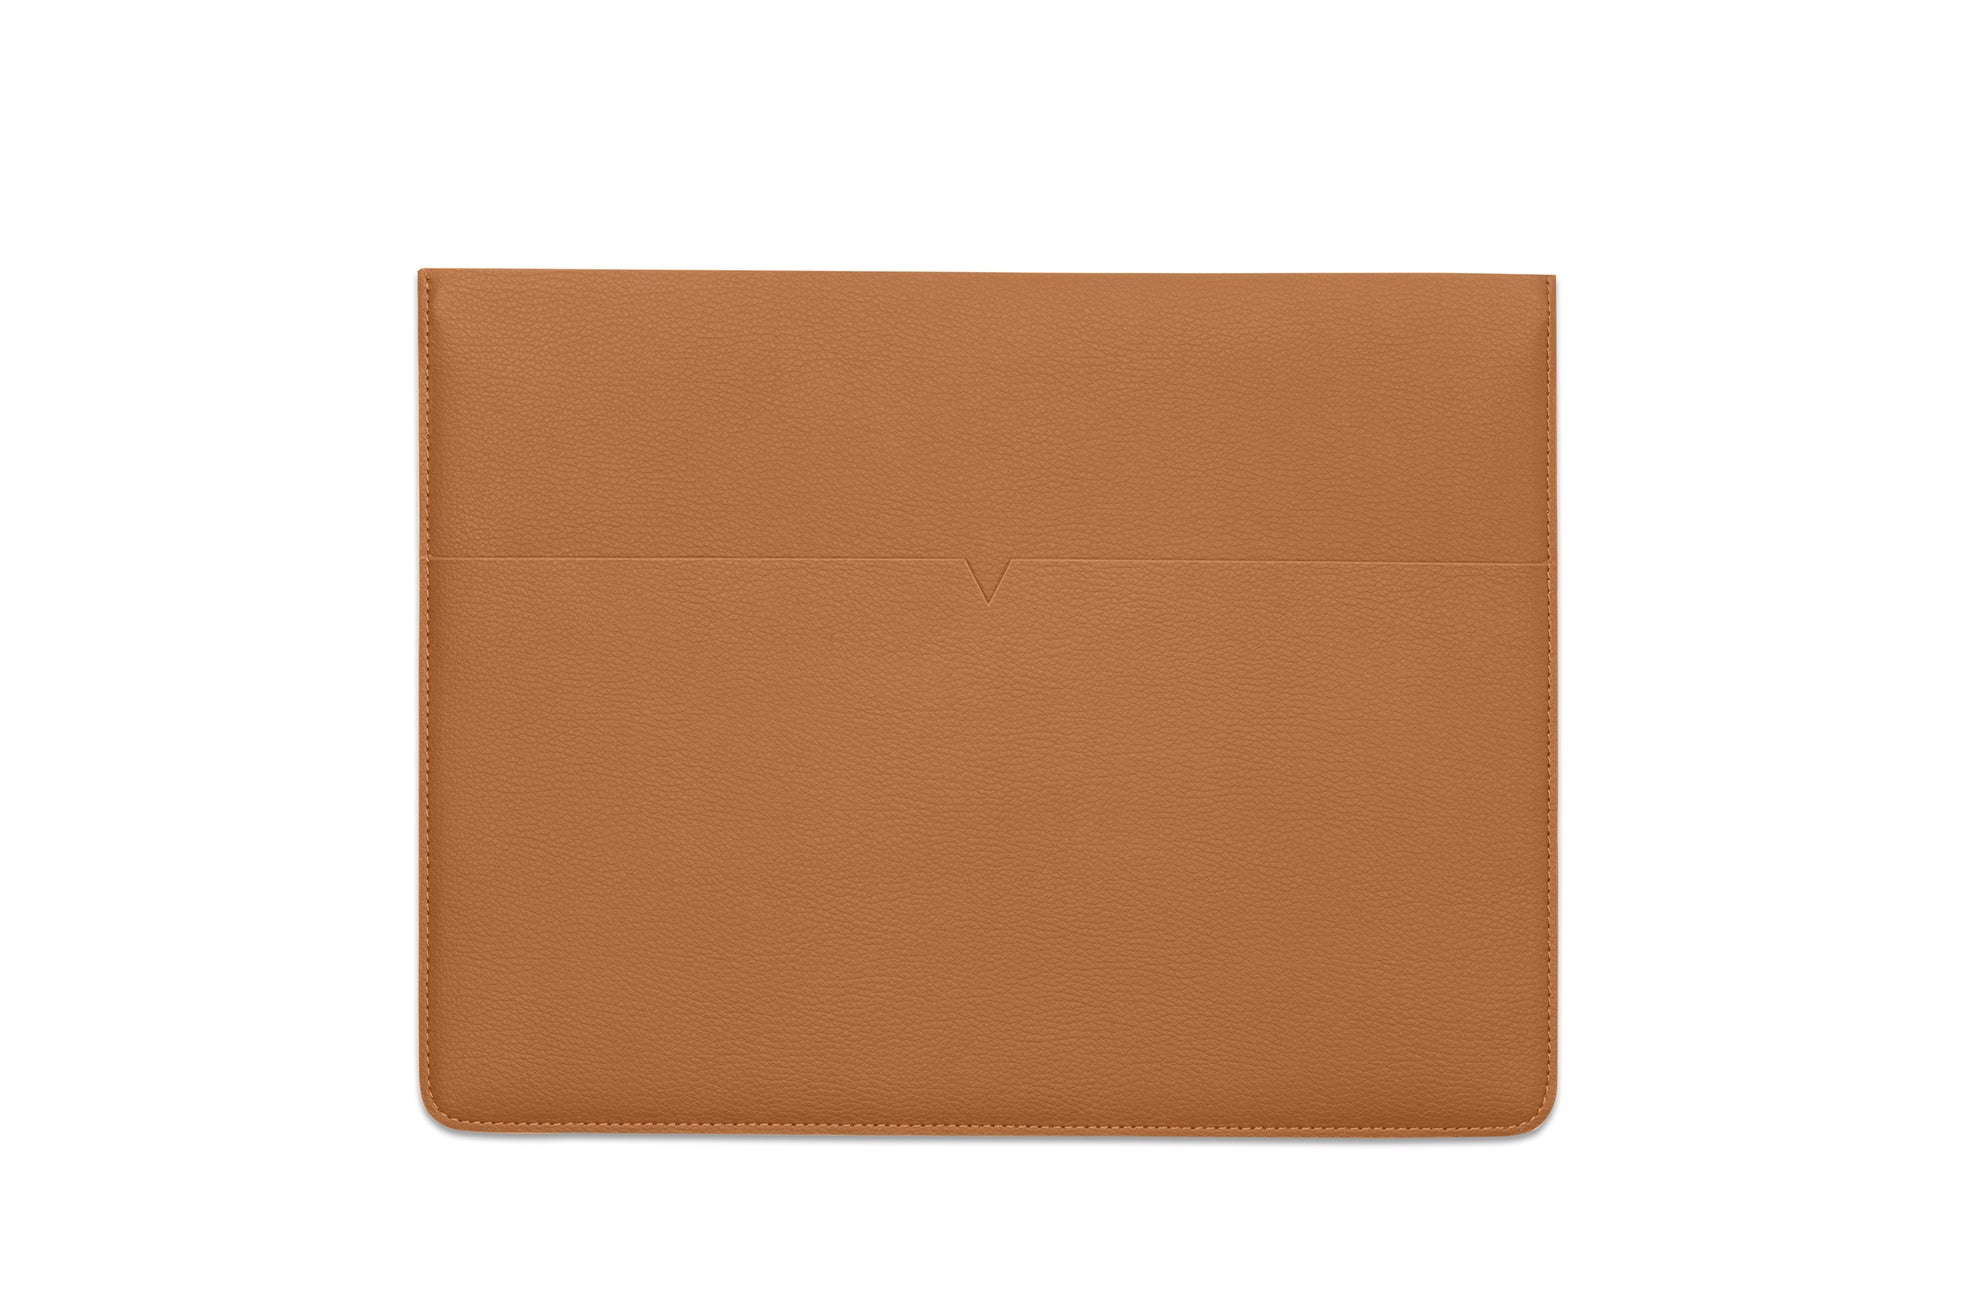 The MacBook Sleeve 13-inch - Sample Sale in Technik in Caramel image 1